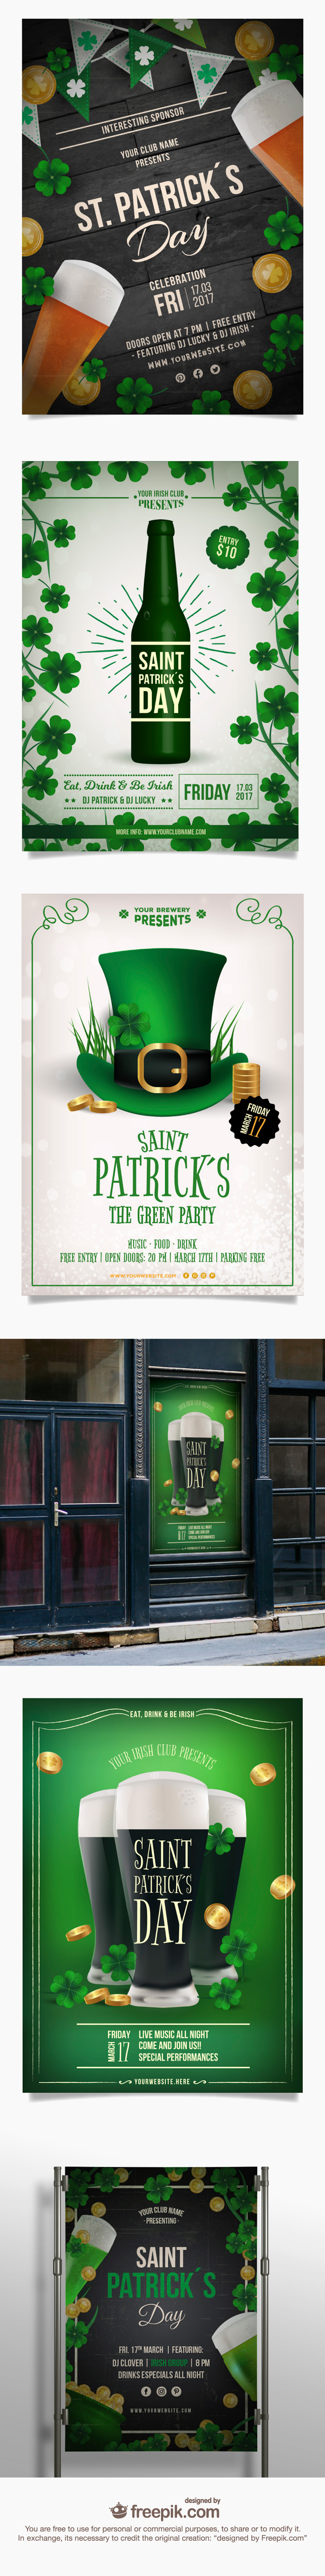 poster print St. Patrick's day free